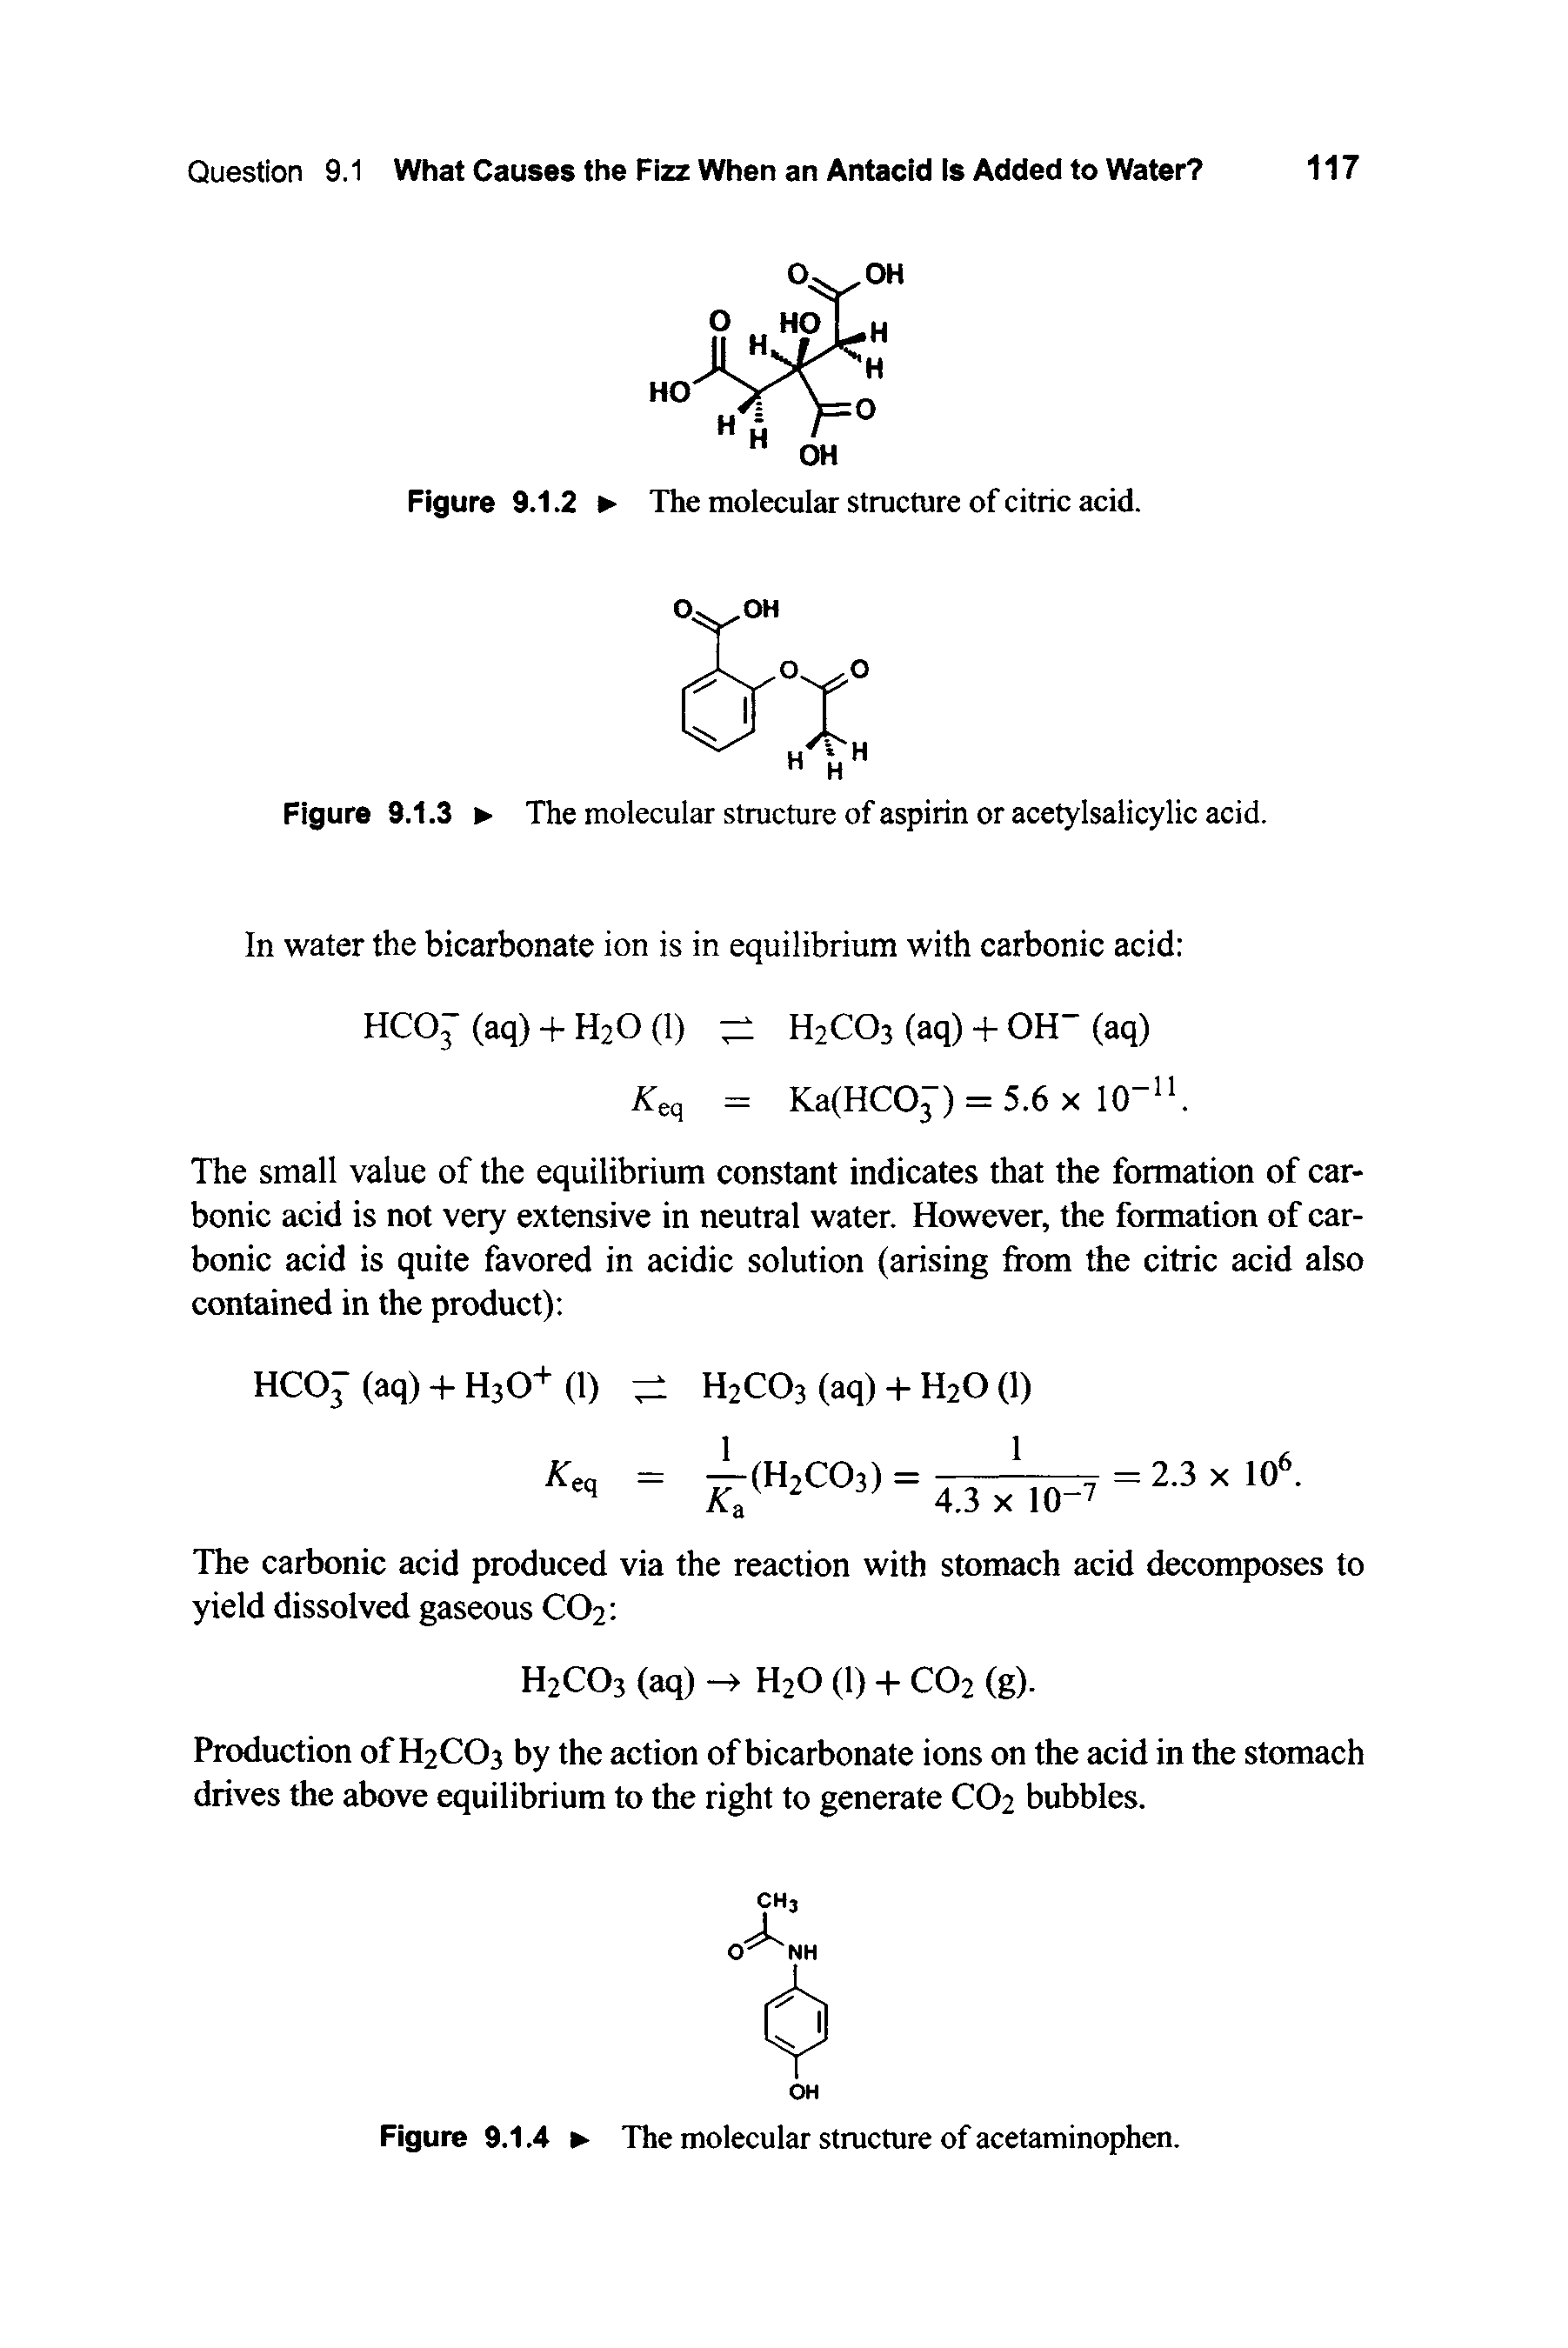 Figure 9.1.3 The molecular structure of aspirin or acetylsalicylic acid.